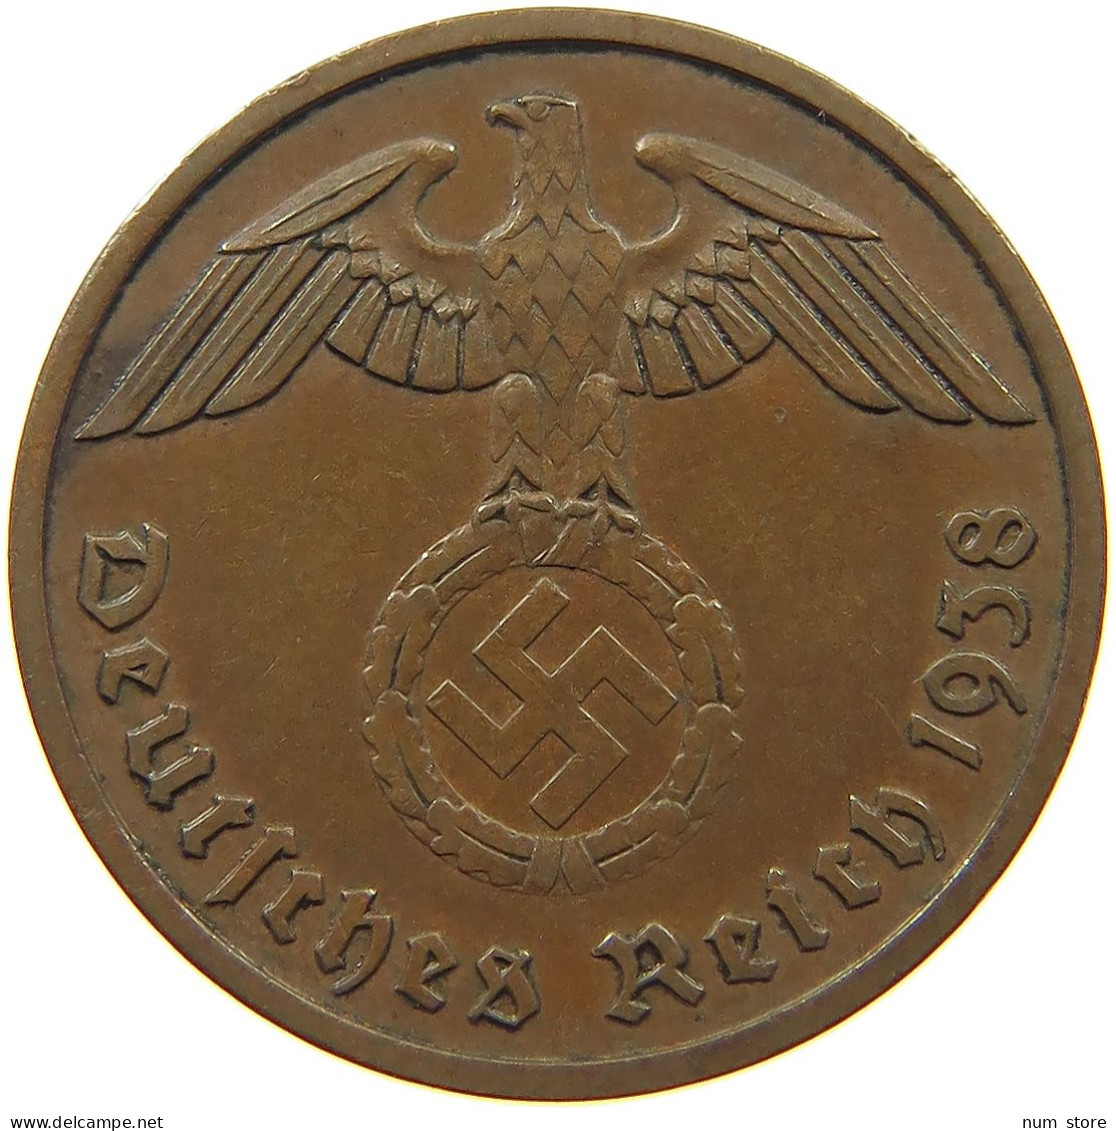 GERMANY 2 PFENNIG 1938 A #c083 0127 - 2 Reichspfennig